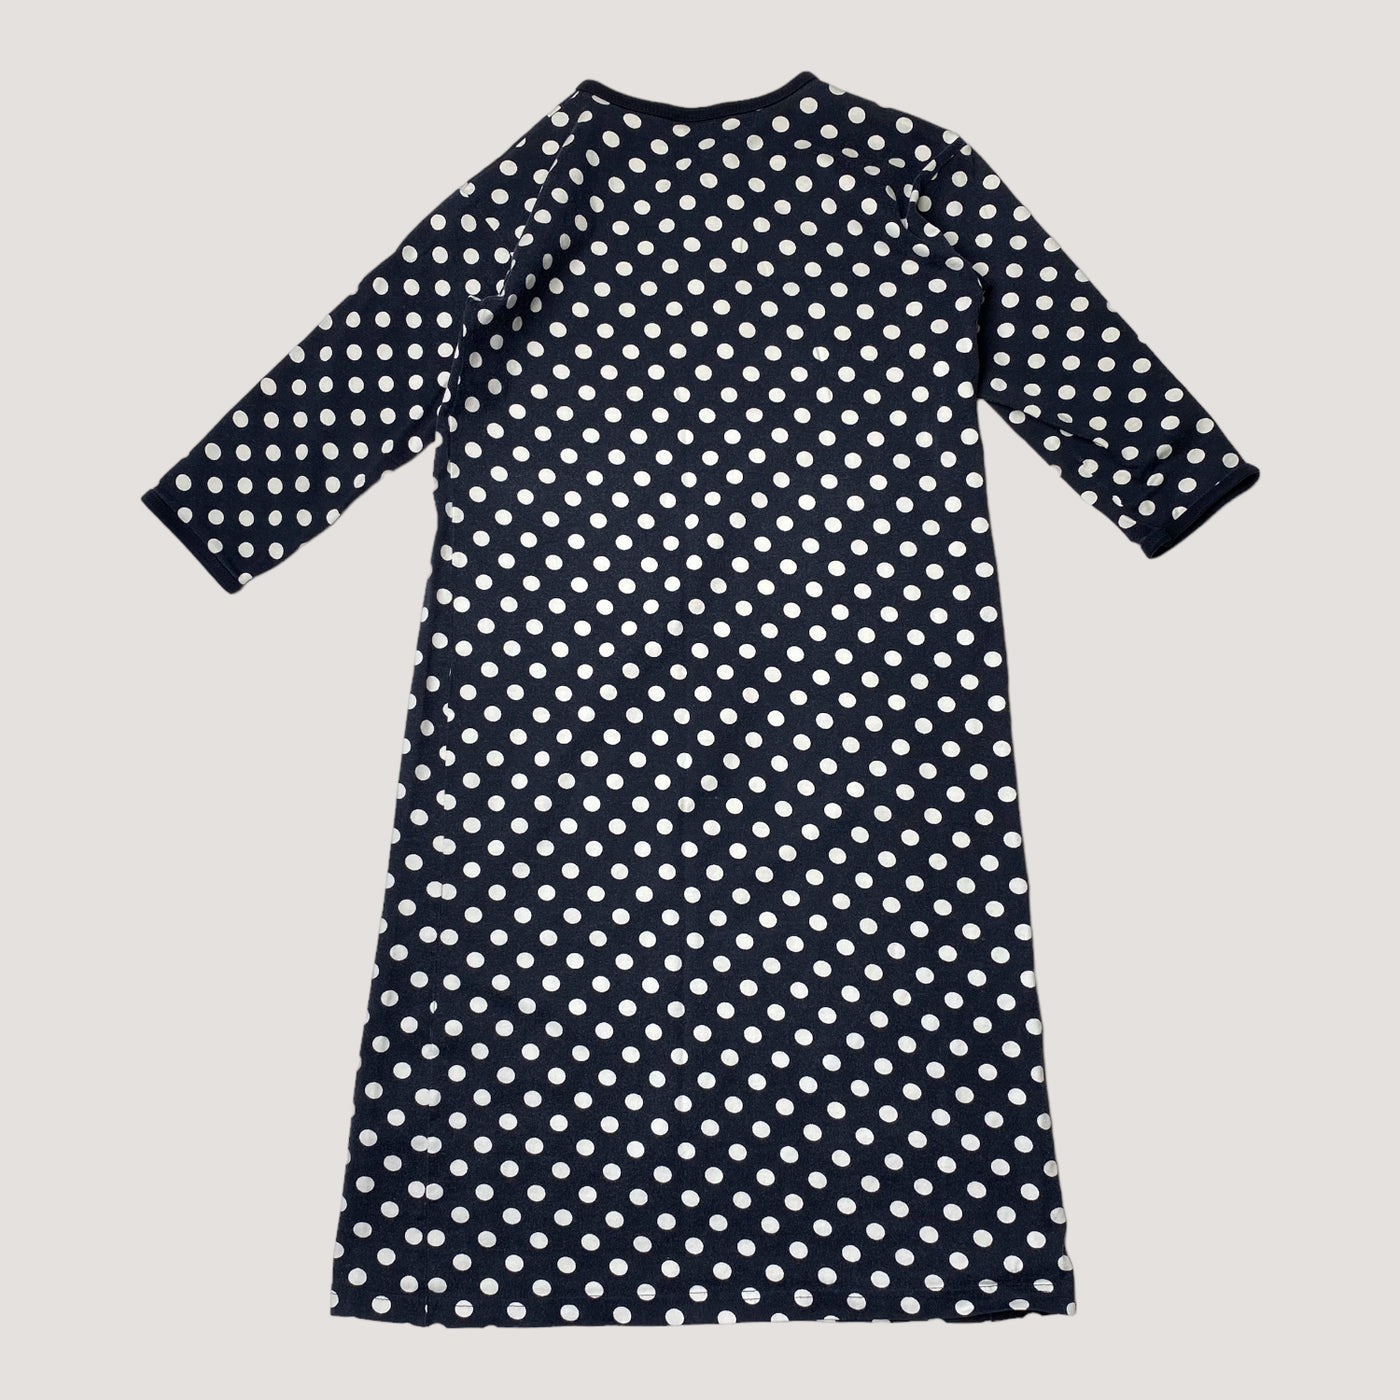 Marimekko dress, dots | 110cm